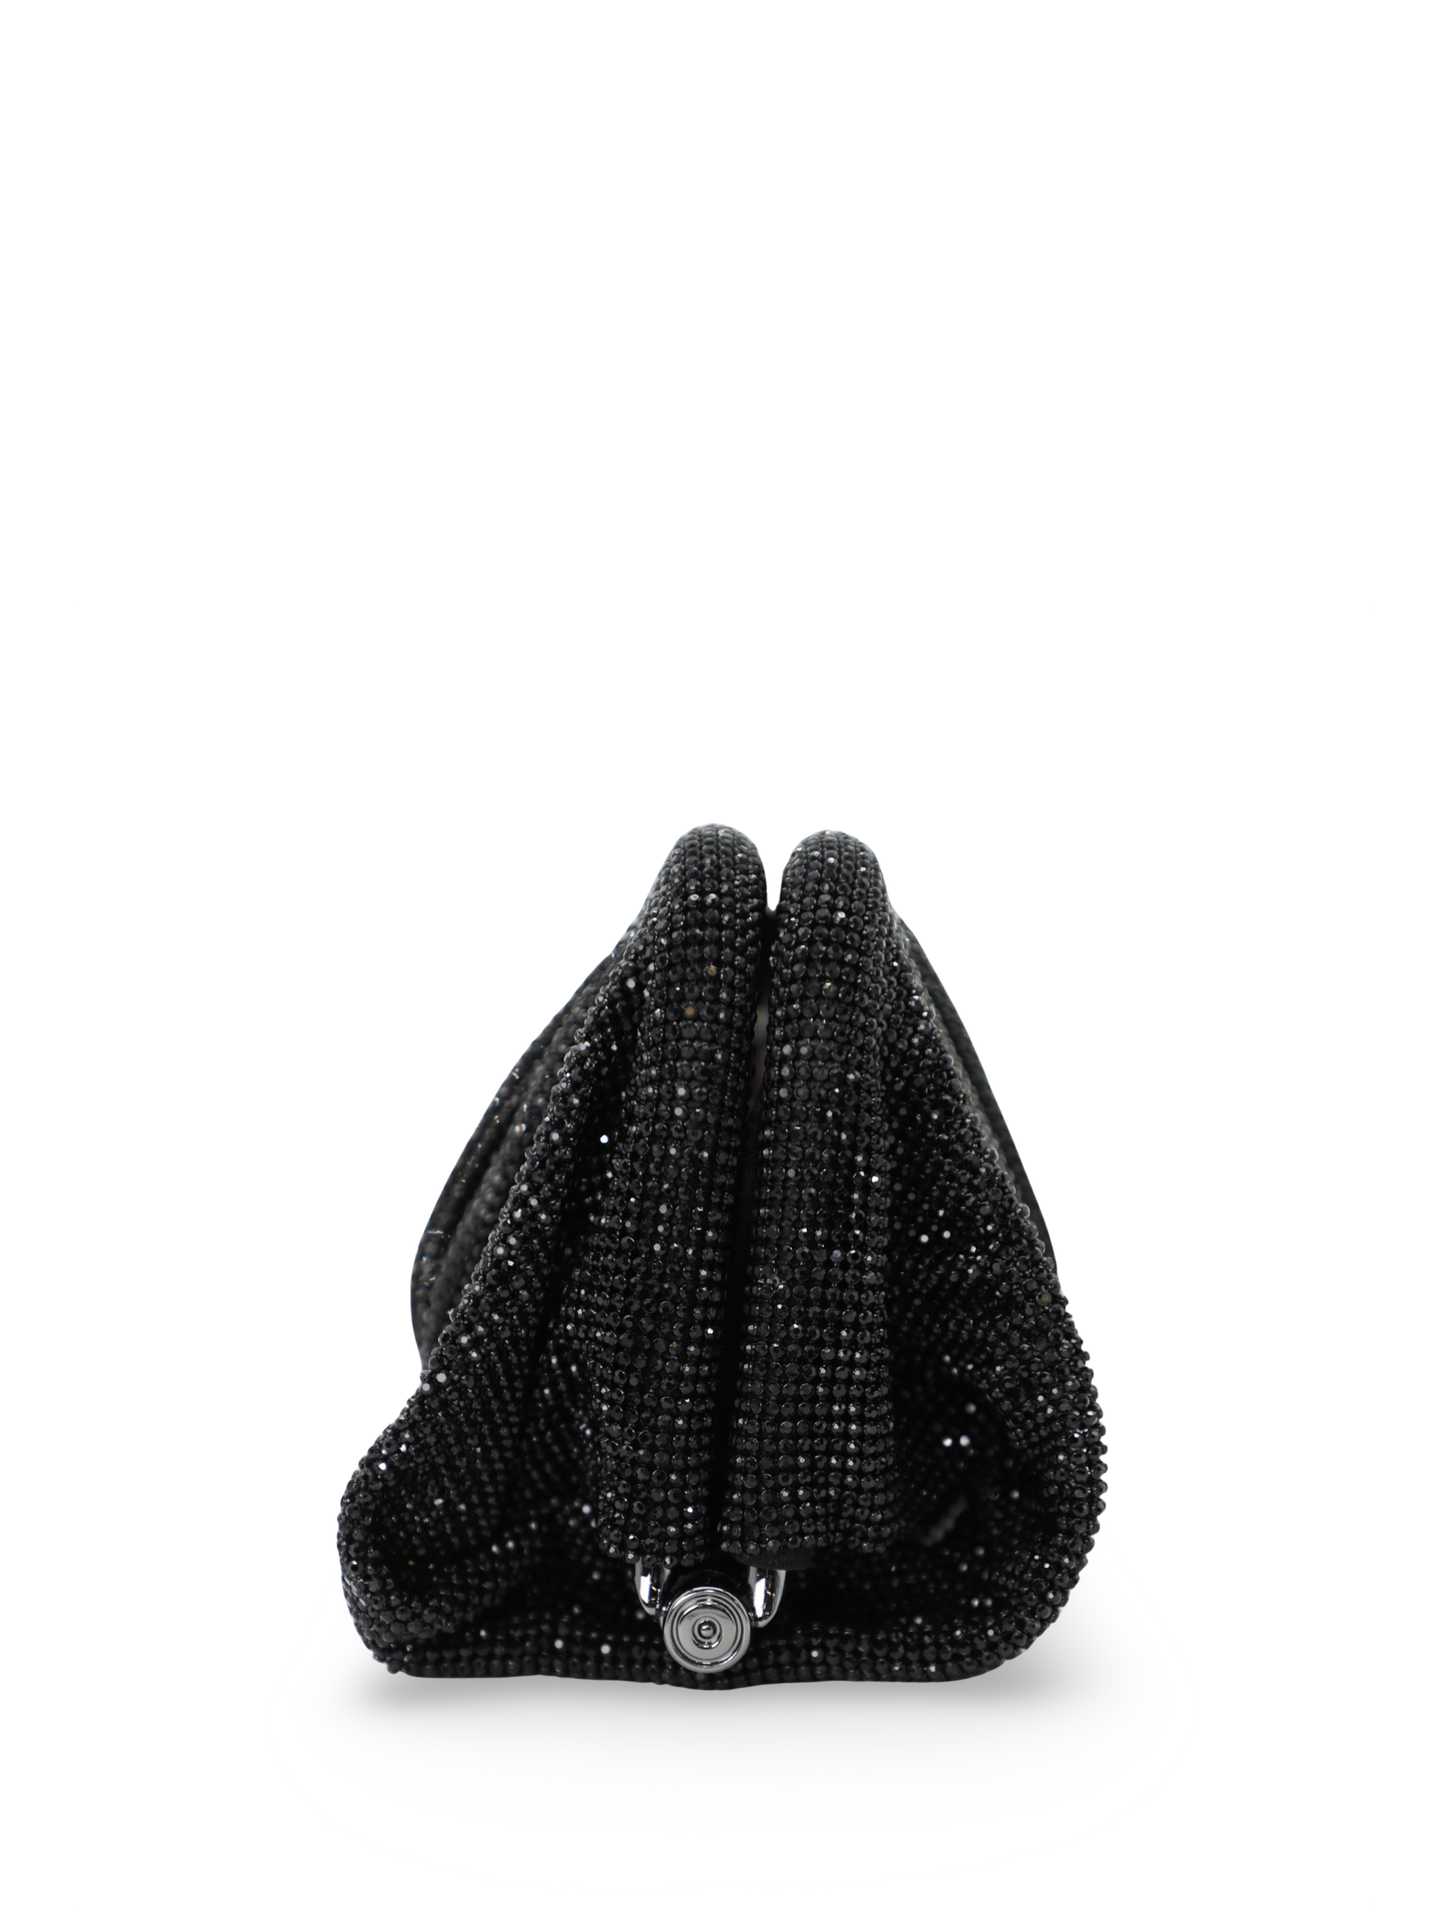 Benedetta Bruzziches Venus La Grande Clutch Bag in Black/Crystal